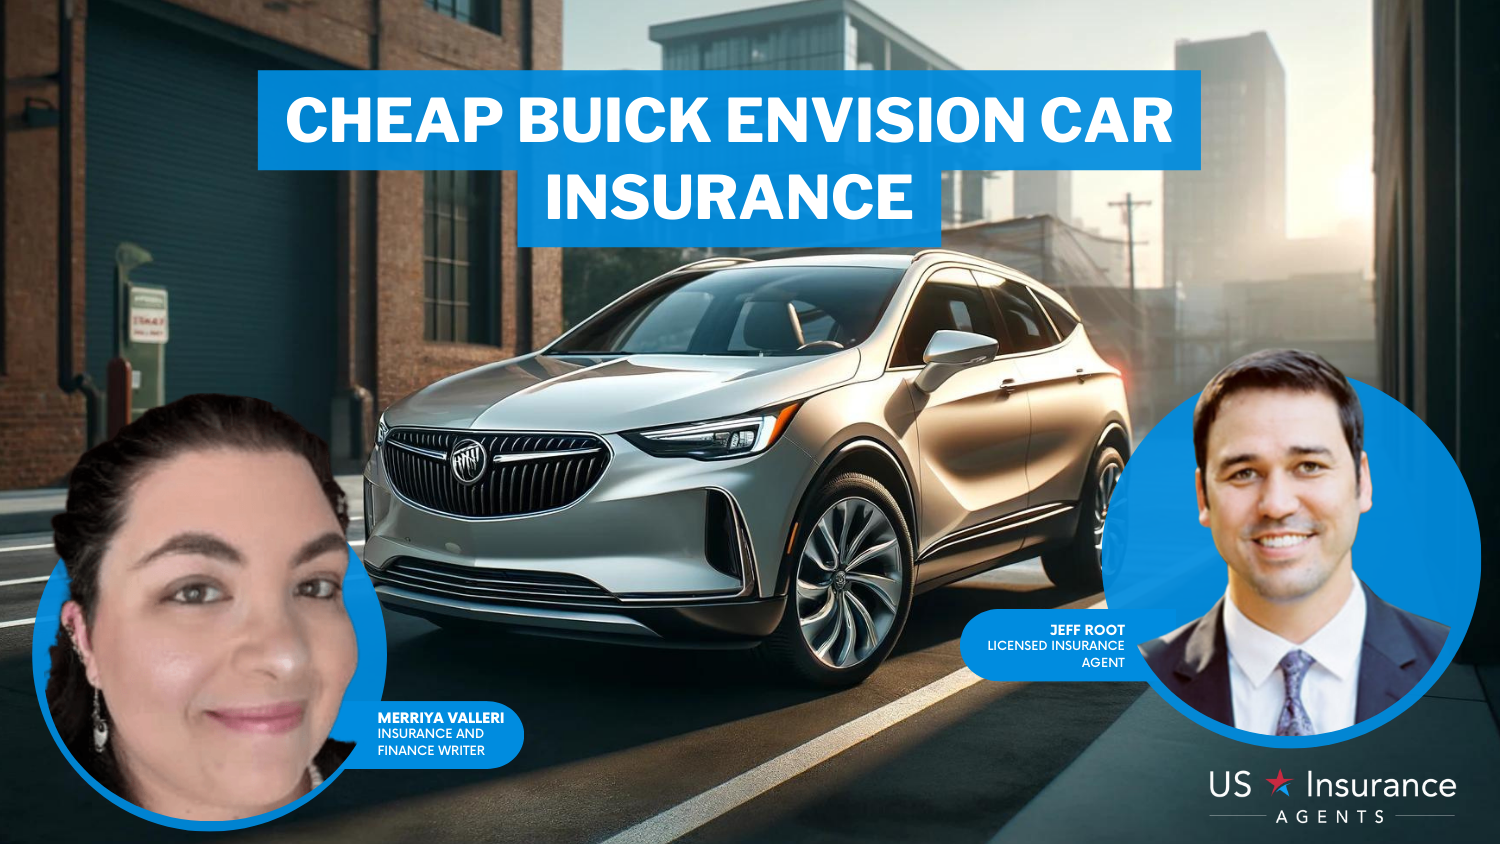 Cheap Buick Envision Car Insurance: State Farm, Progressive, and Travelers.